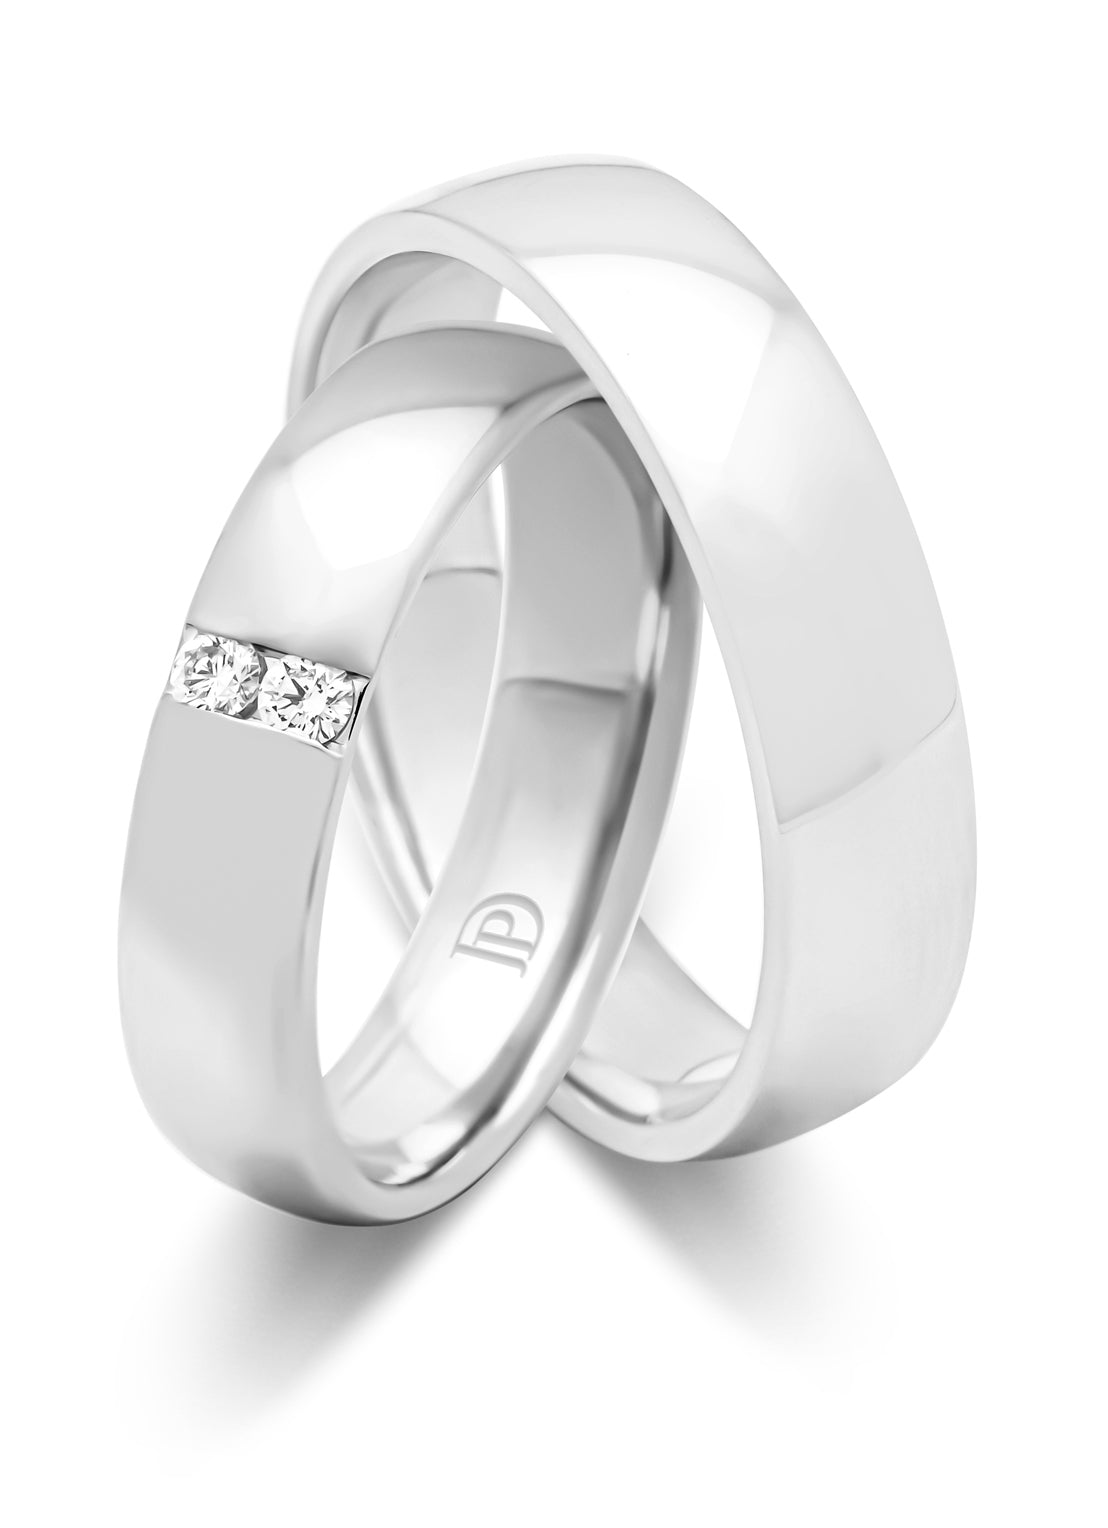 White gold 14 kt wedding ring